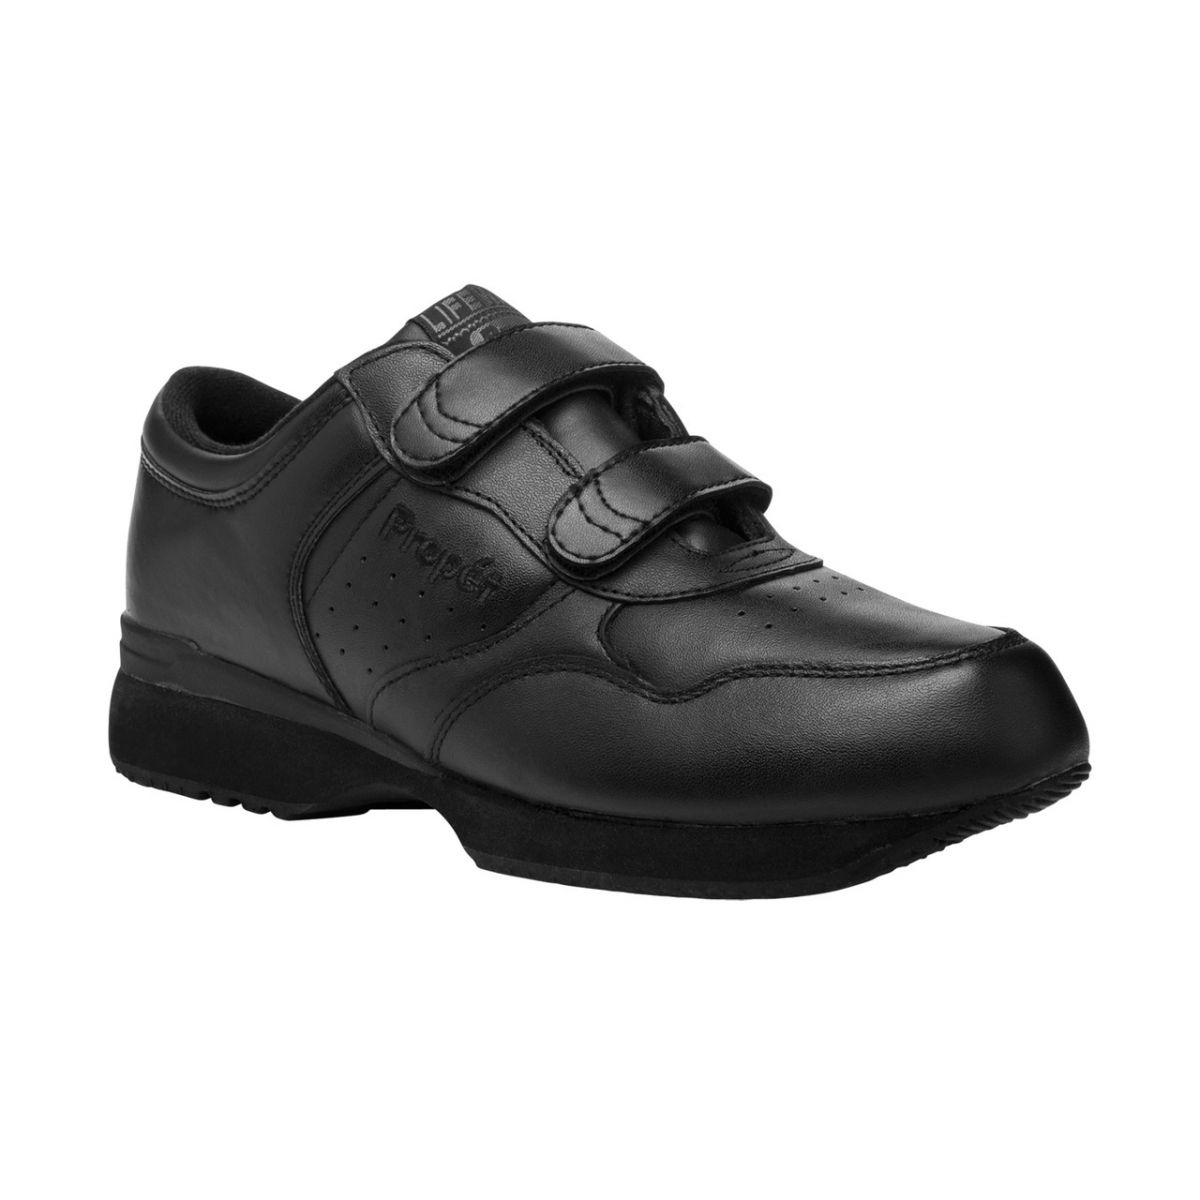 Propet Men's Life Walker Strap Shoe Black - M3705BLK SPORT WHITE - SPORT WHITE, 10.5 Wide